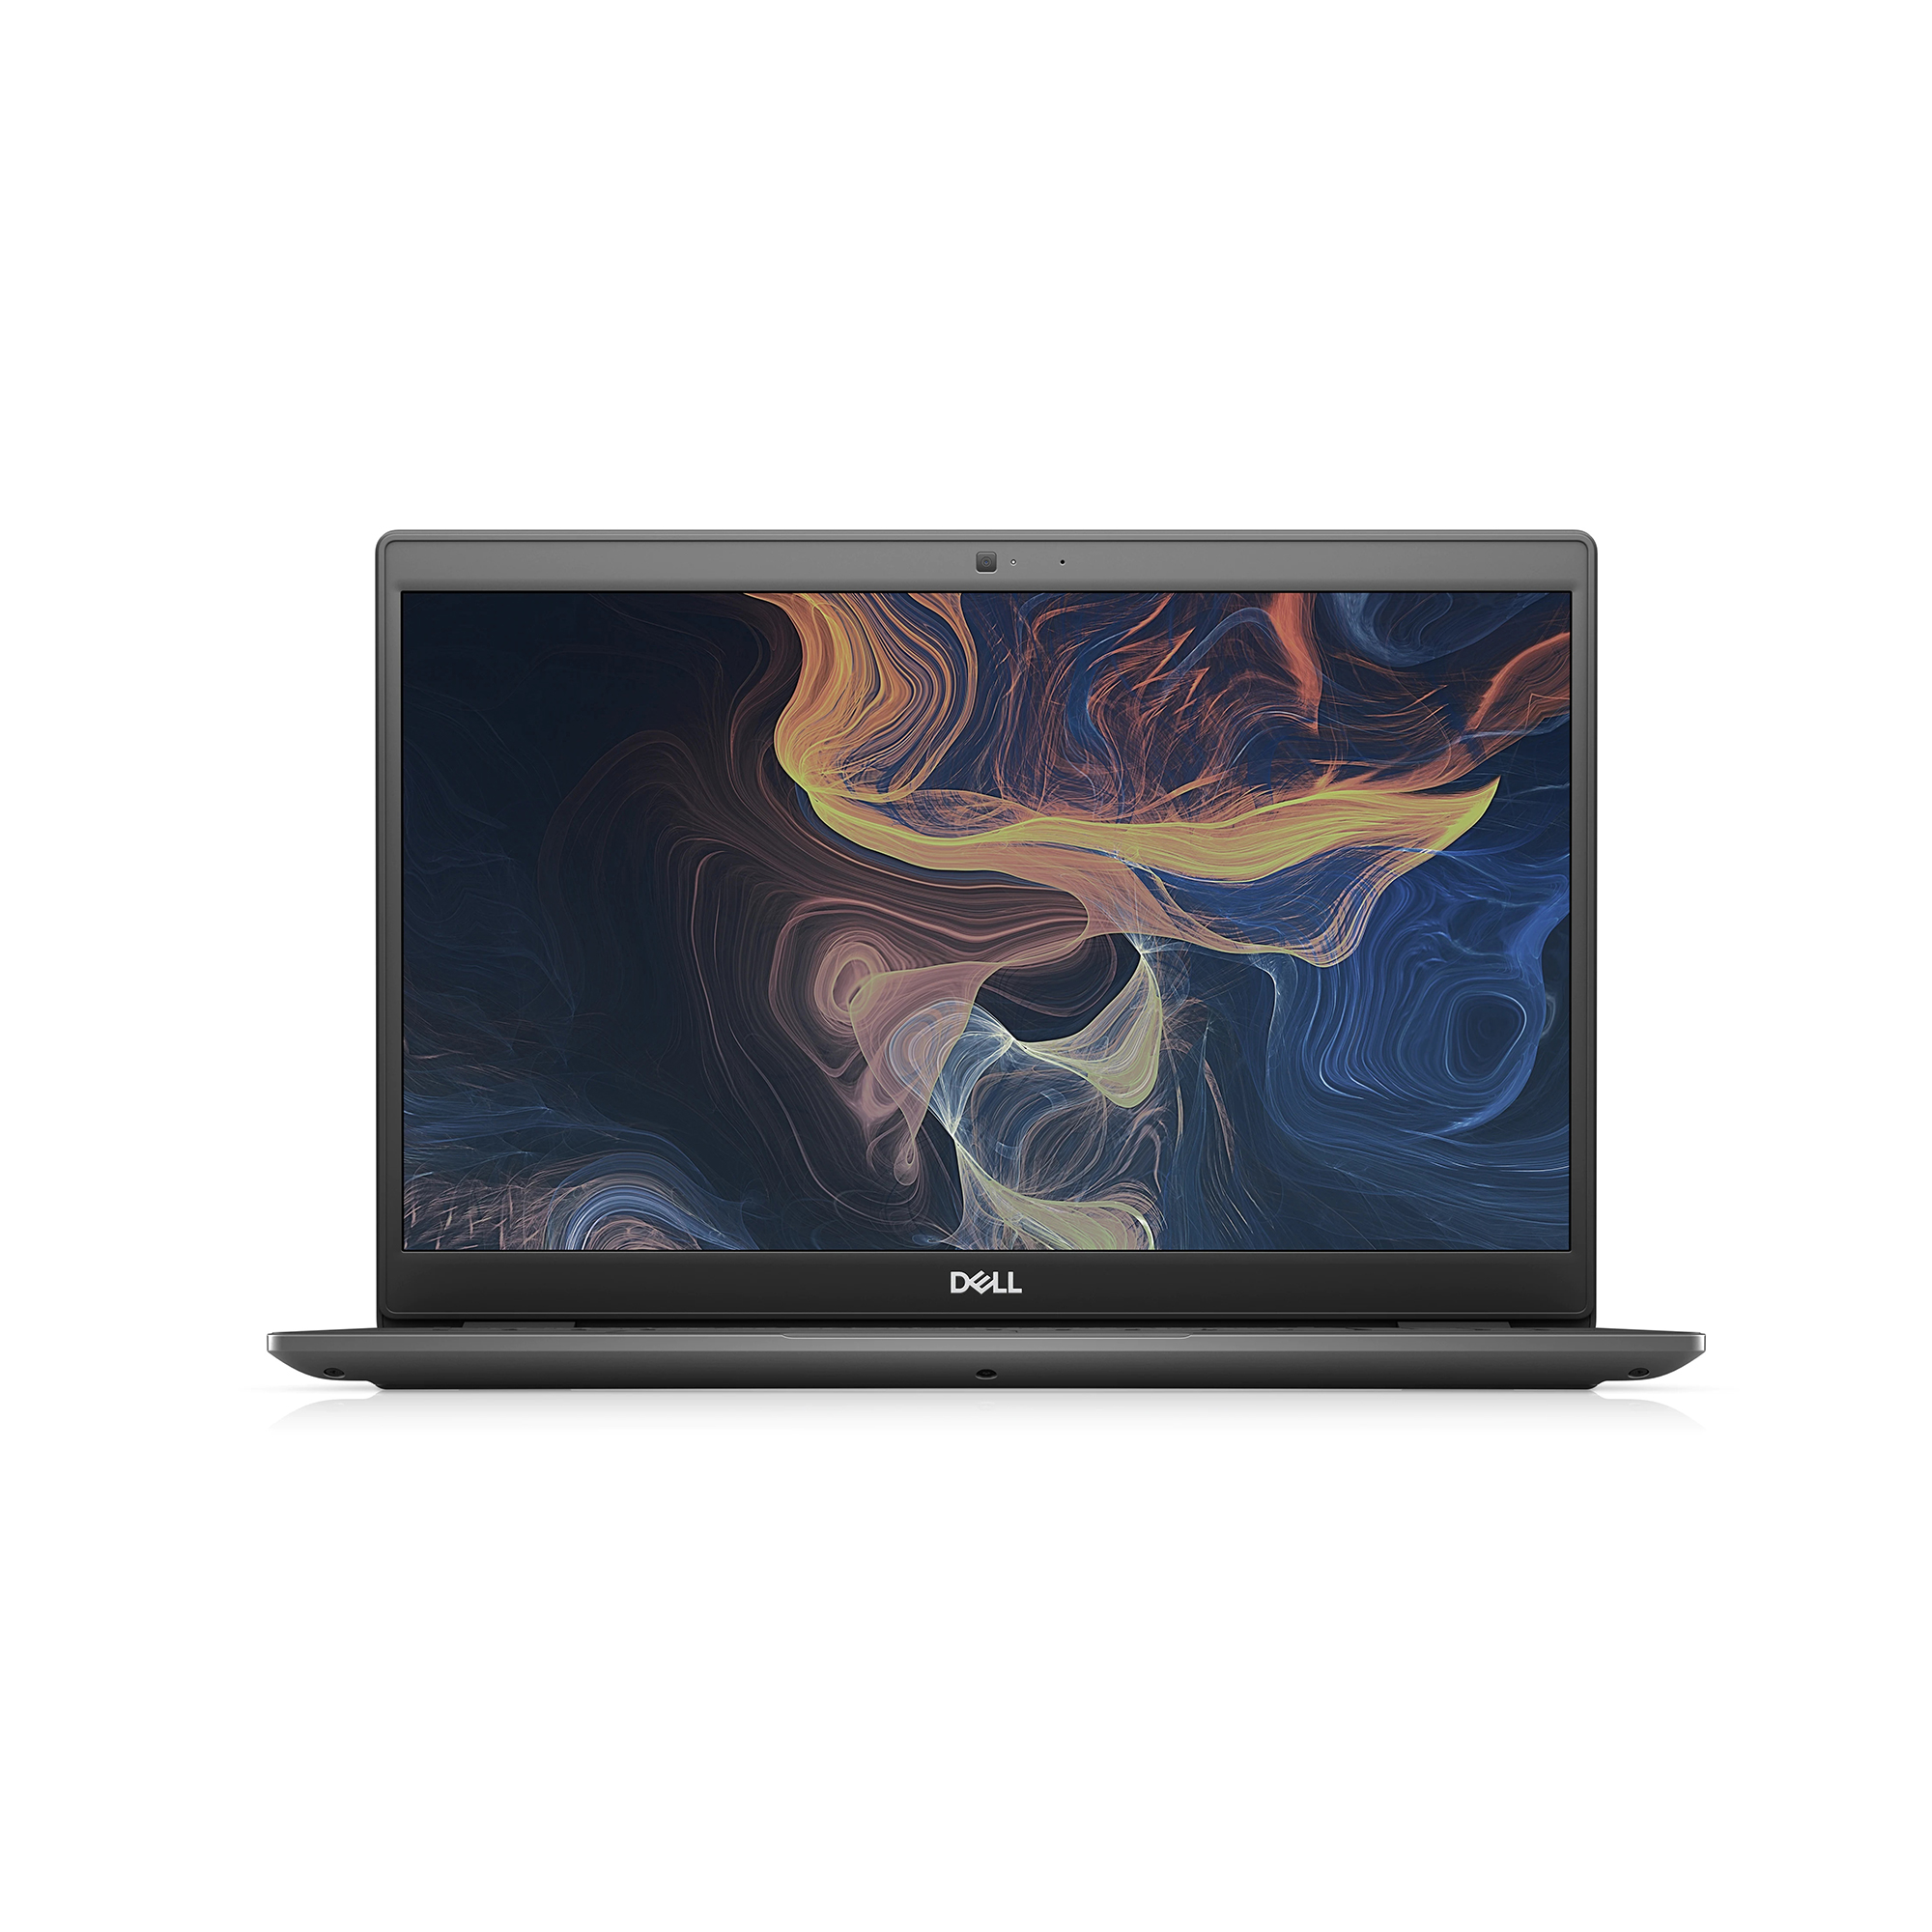 Dell Latitude 3510 - Laptop Tiêu Chuẩn USA - Mới 100% Giá Tốt